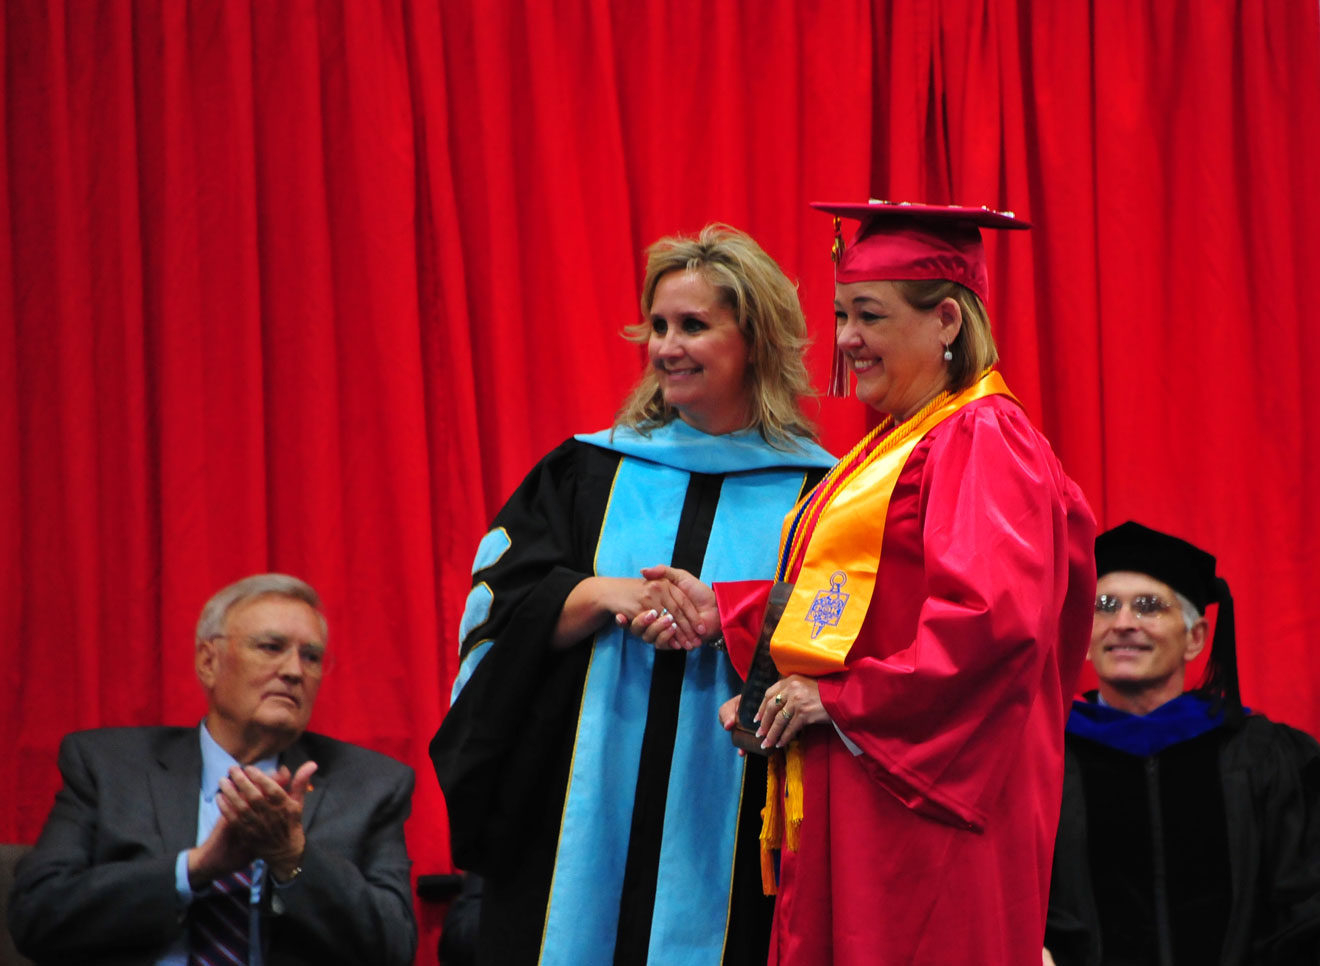 professor and graduate on stage in regalia